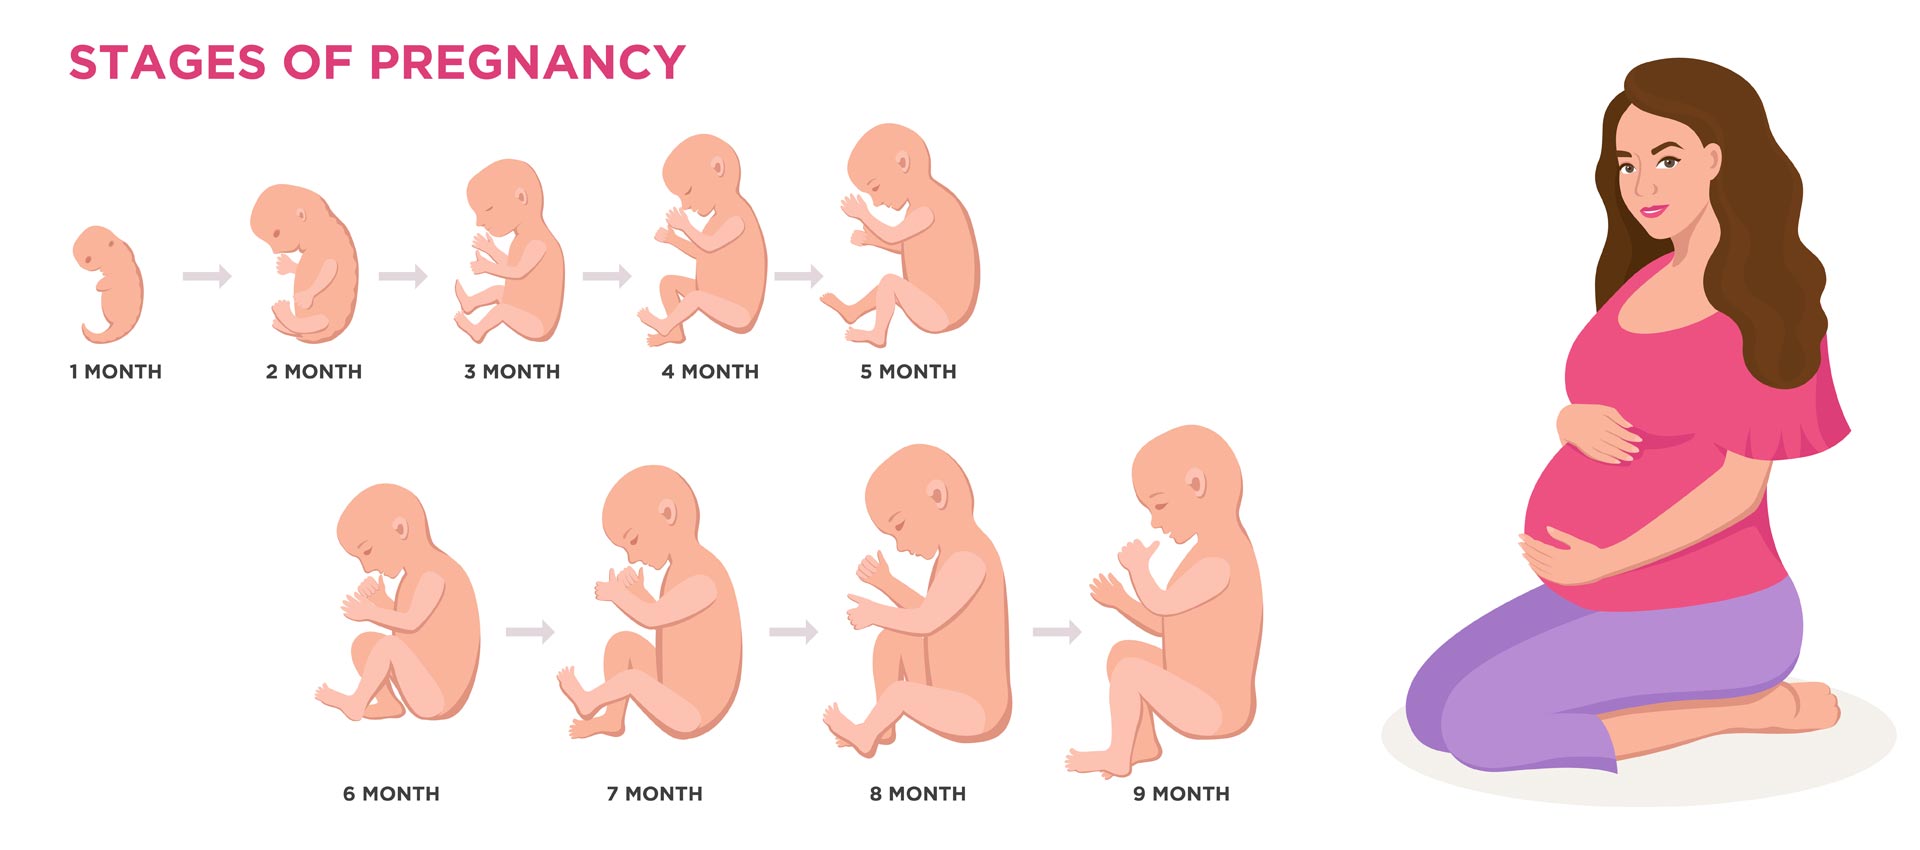 fetal development image 1